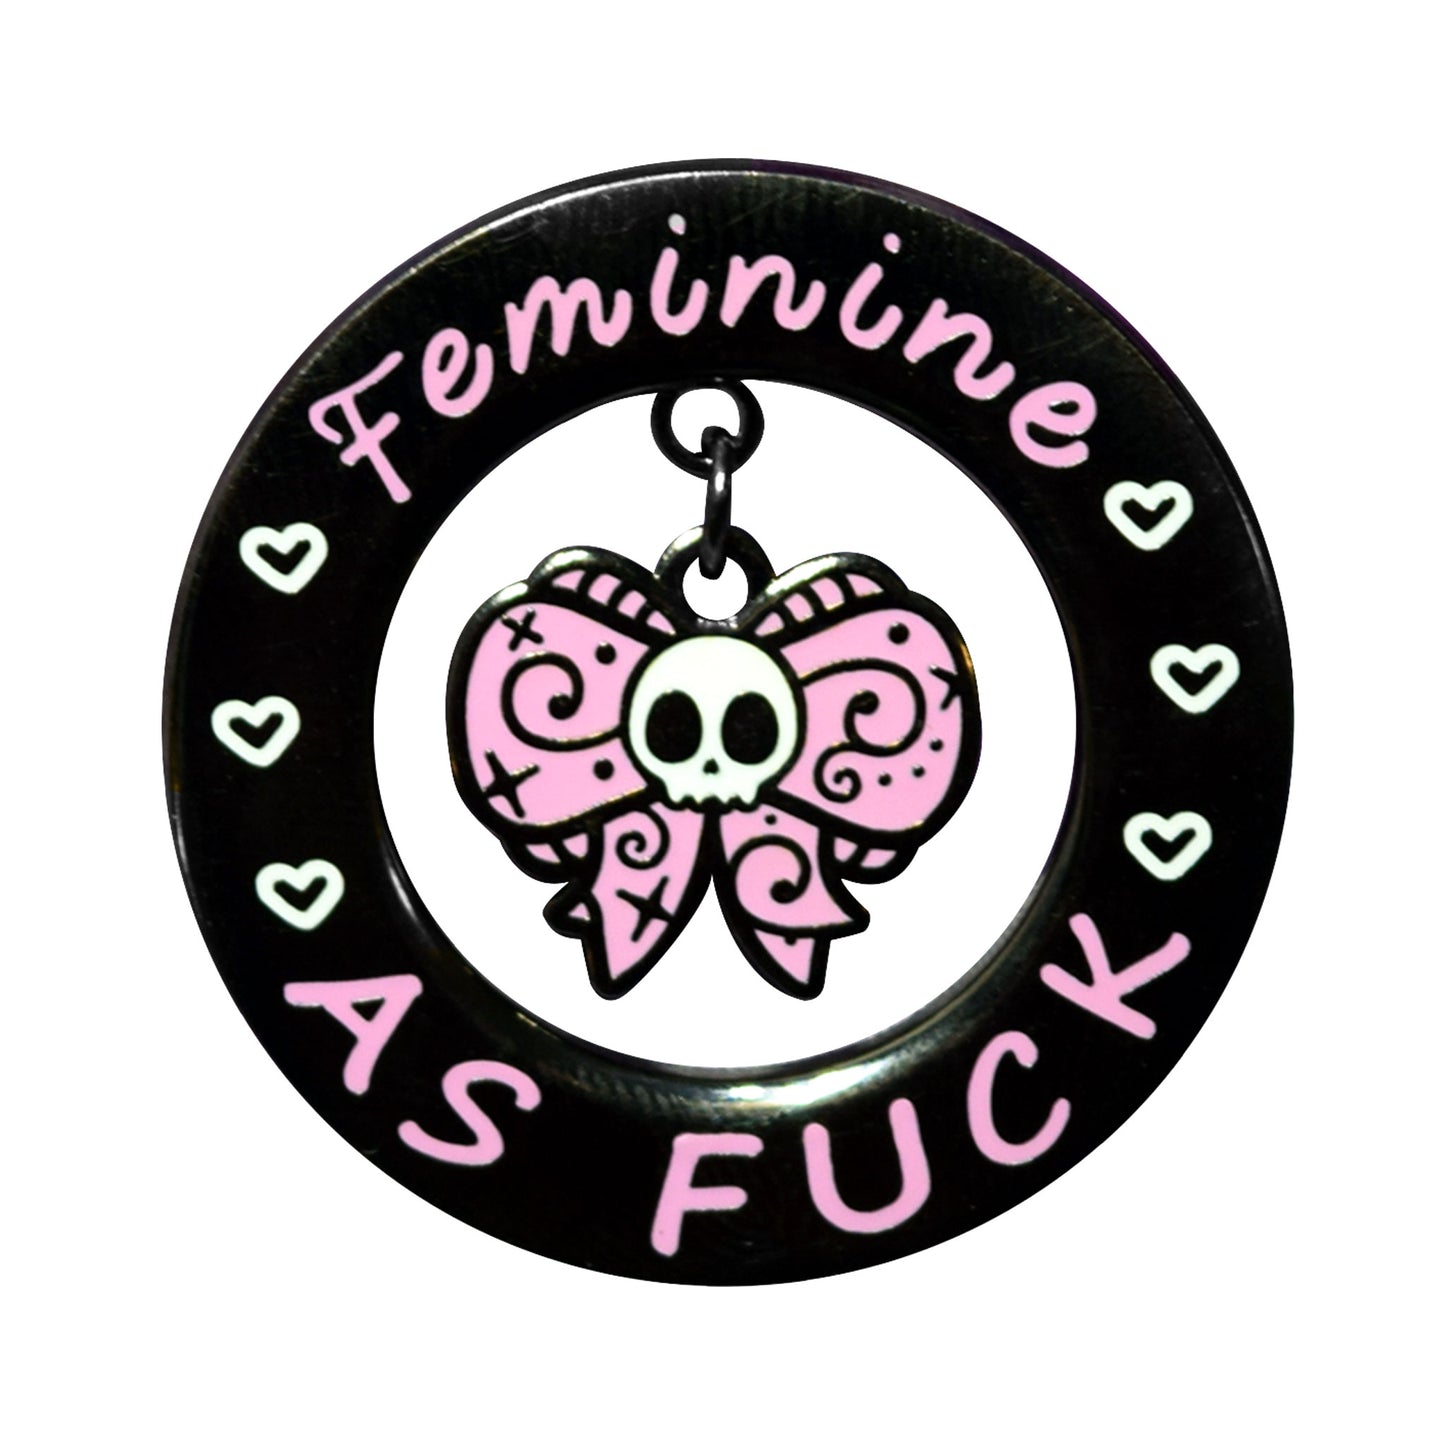 Feminine as Fuck